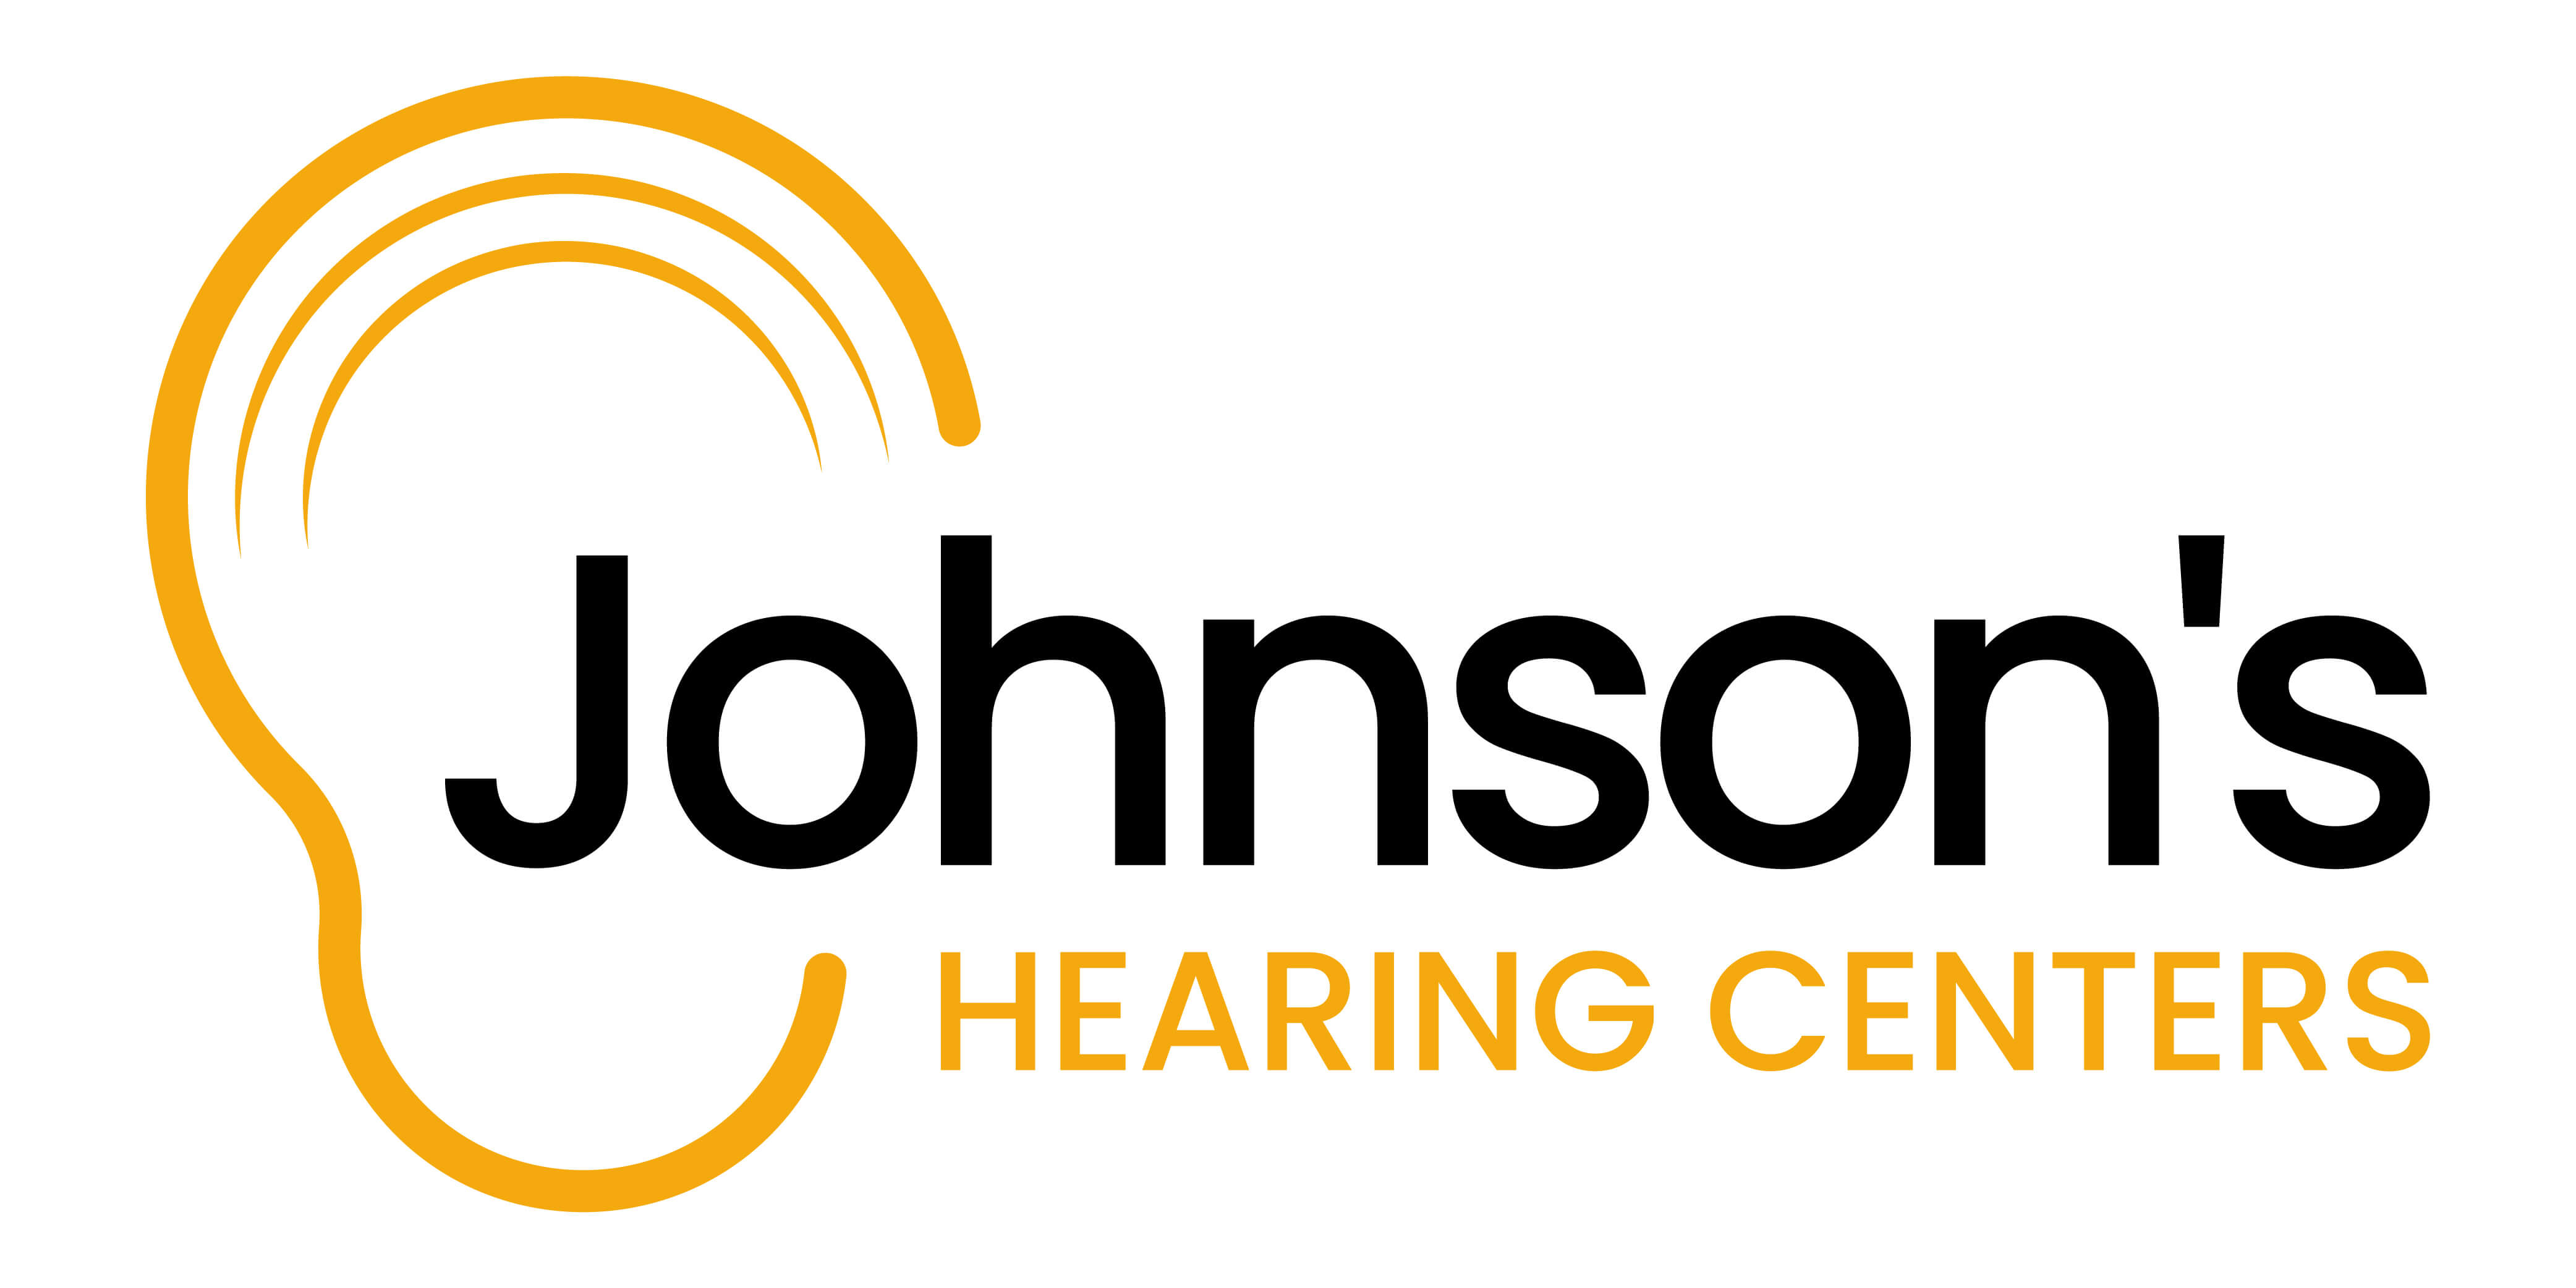 Johnson's Hearing Centers